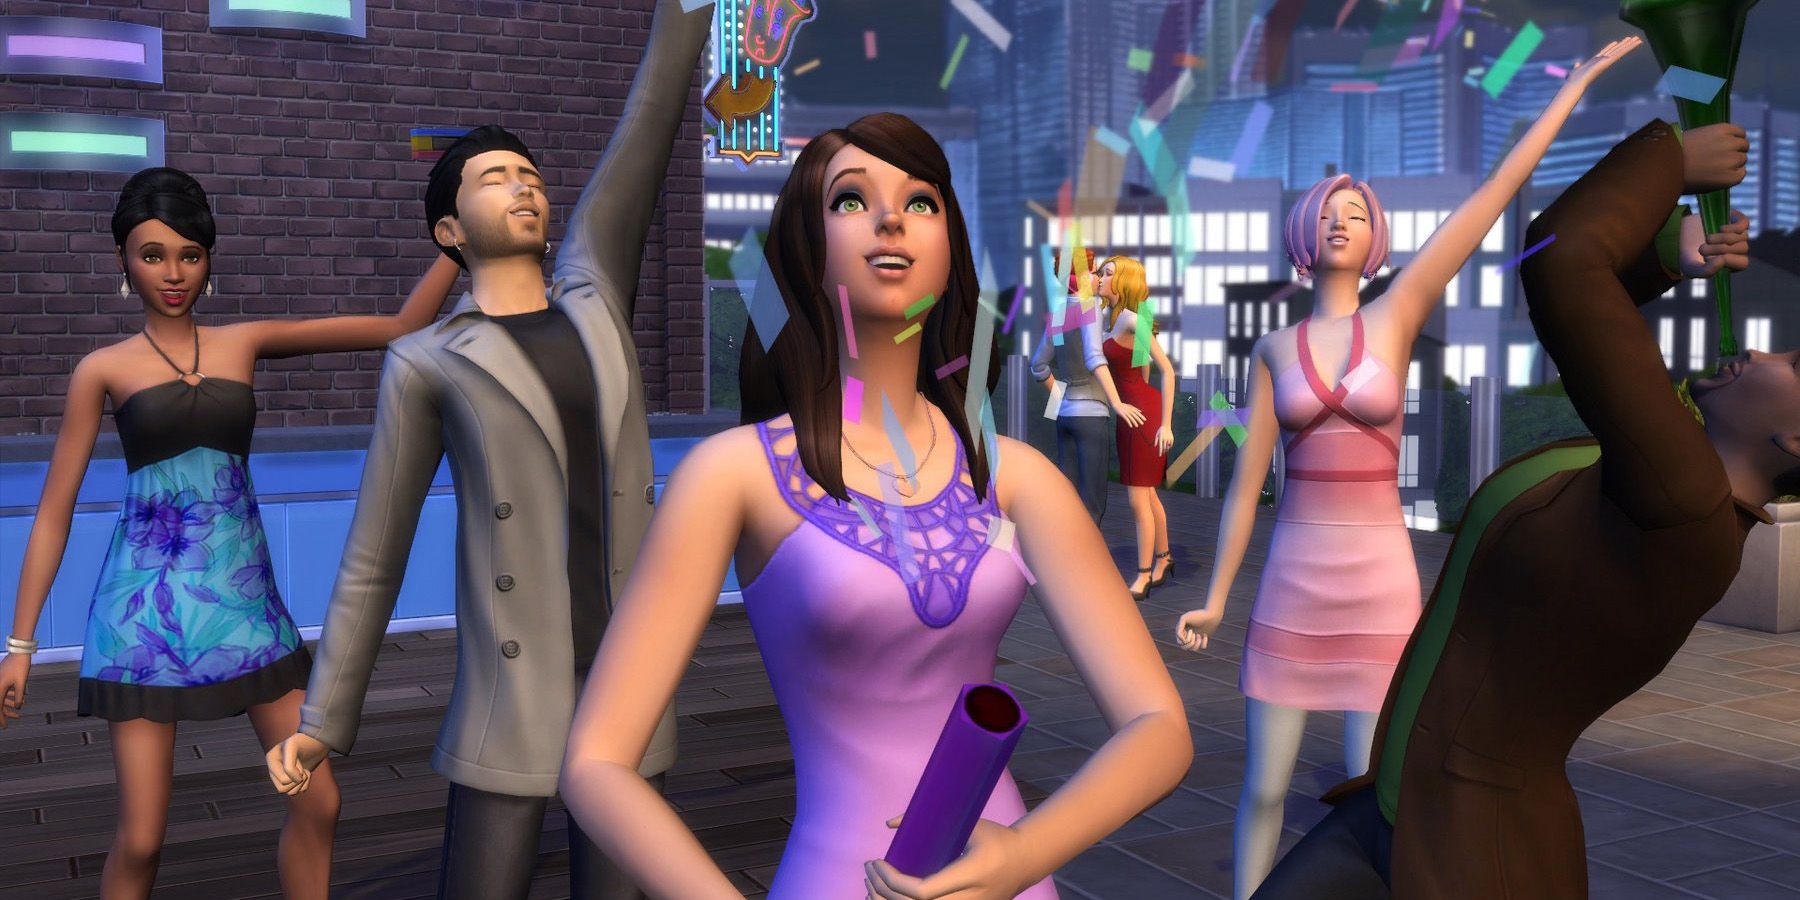 The Sims 4 celebration